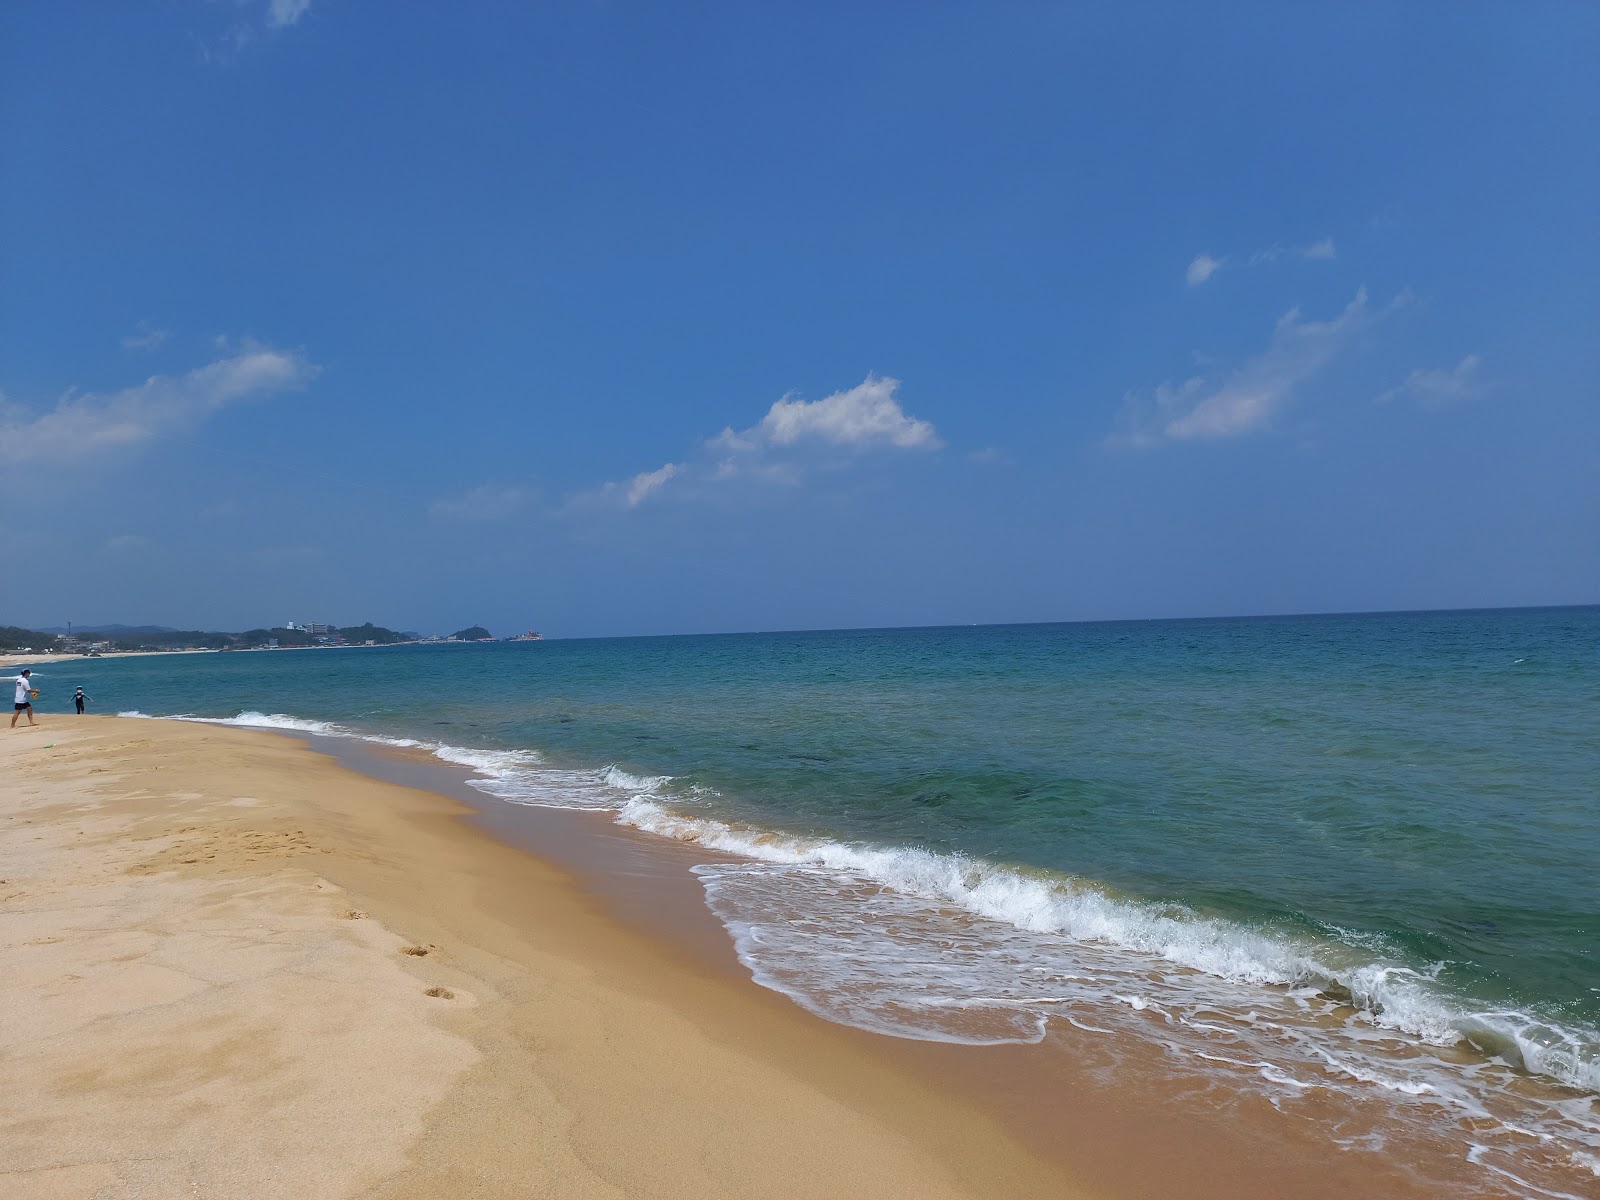 Foto de Wonpo Beach - lugar popular entre os apreciadores de relaxamento